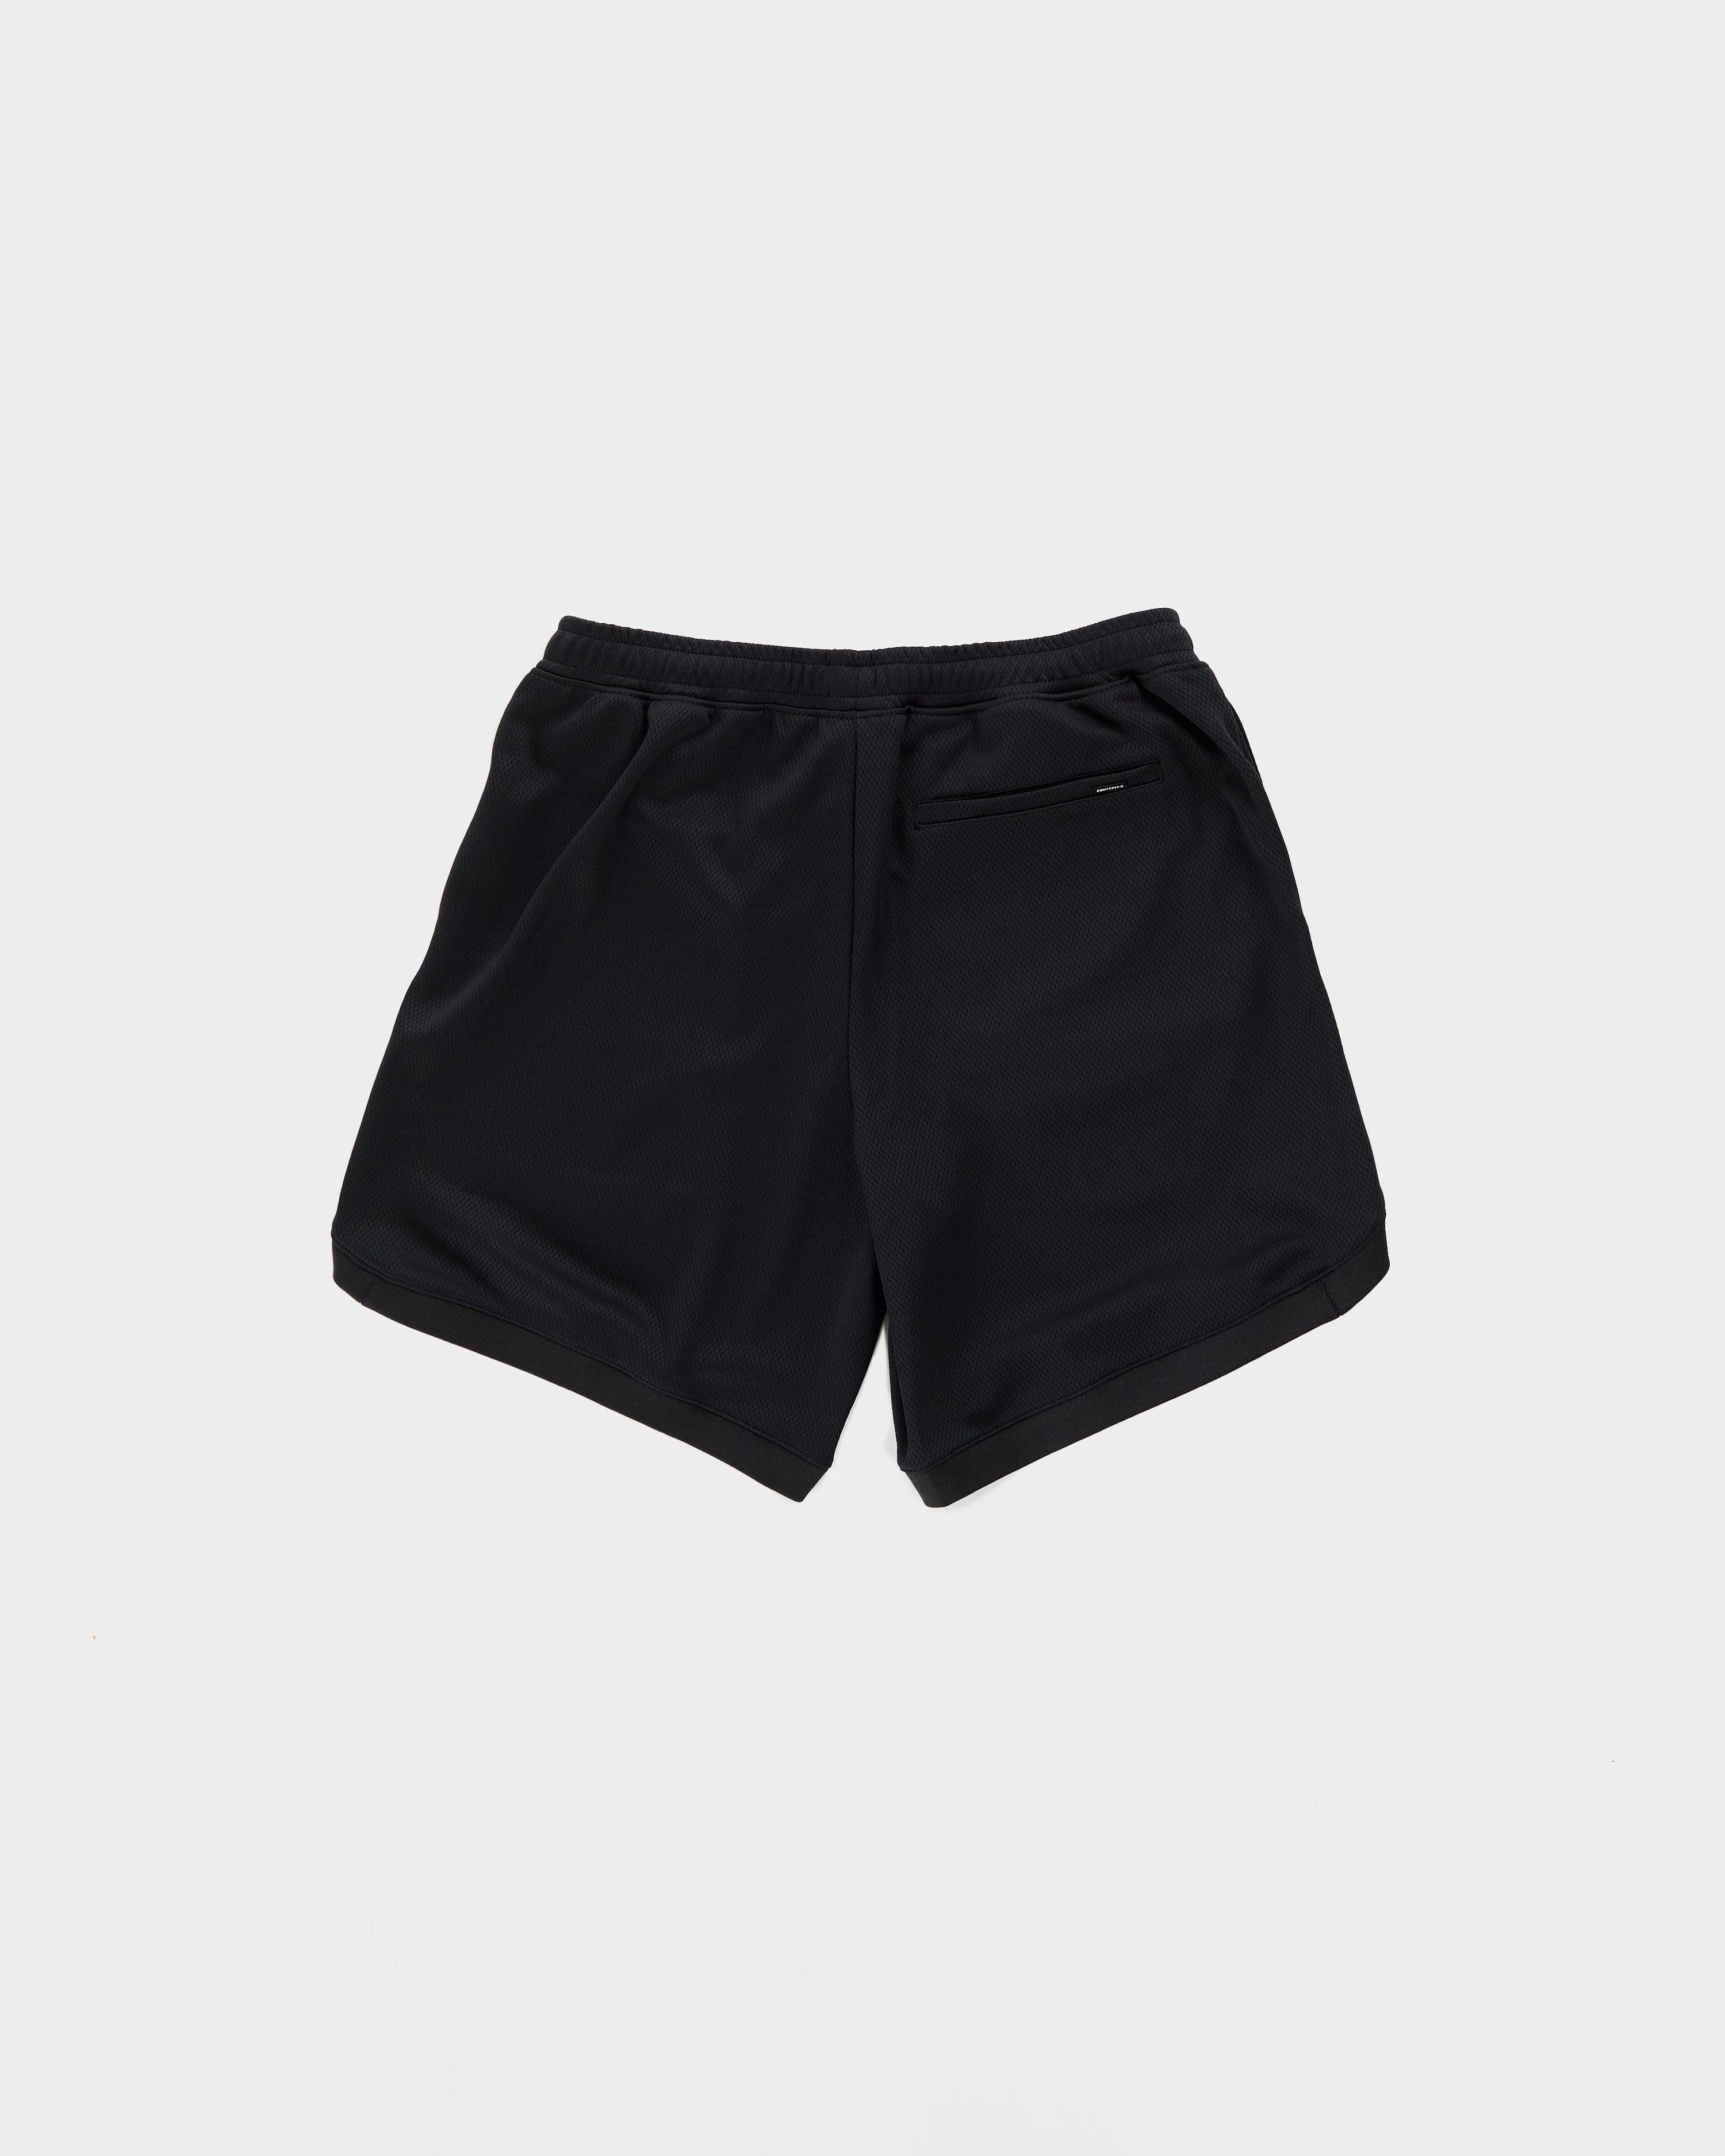 NBHD x Converse - Black Shorts - Clothing - Black - Image 2